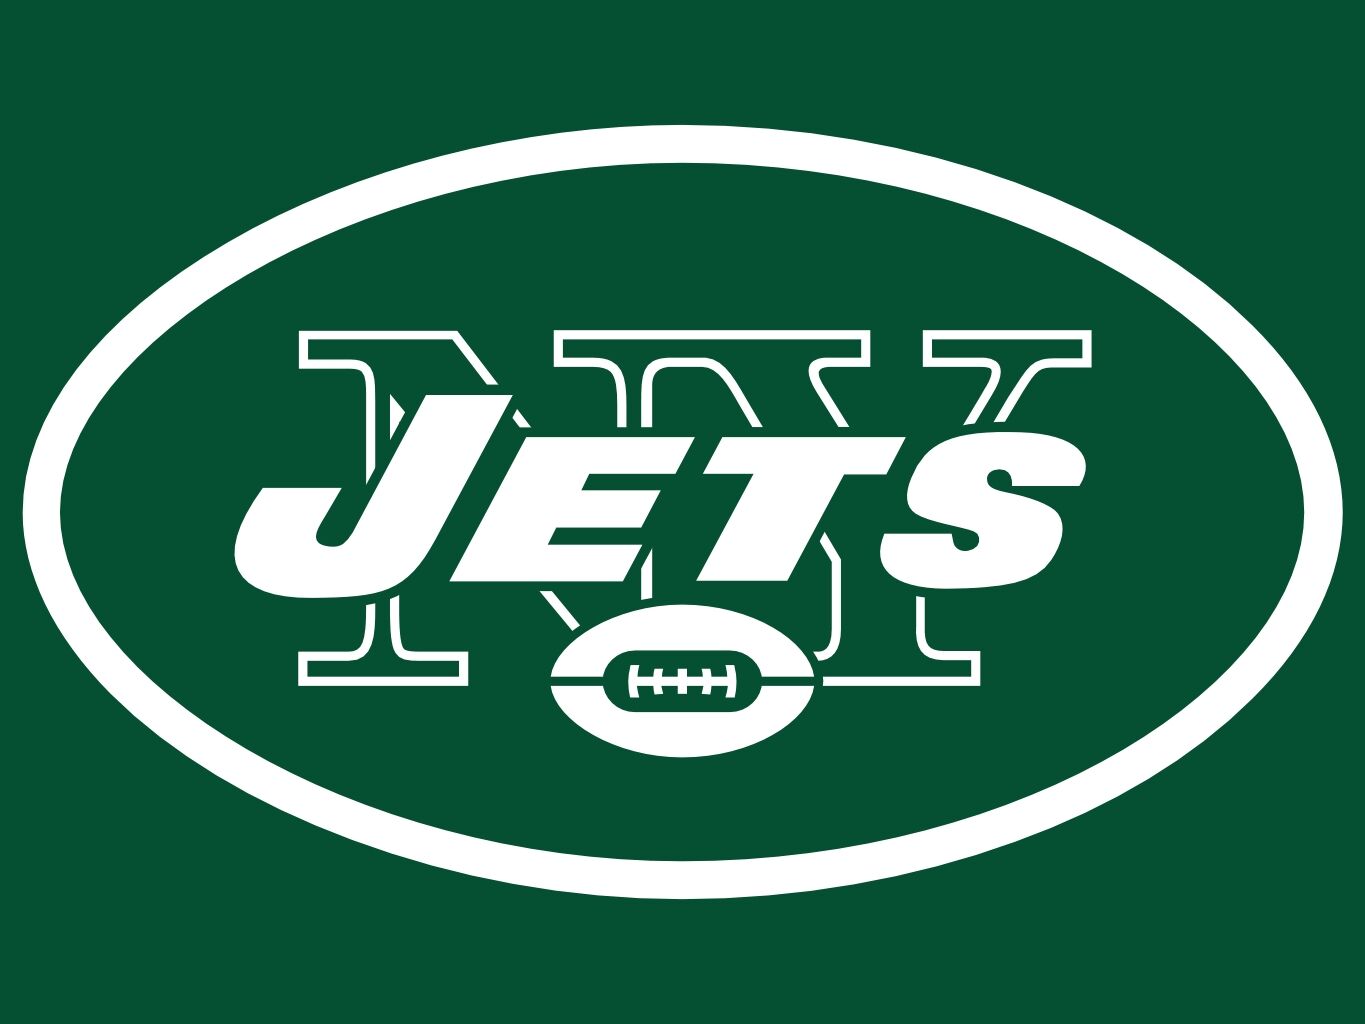 New York Jets, Major League Sports Wiki